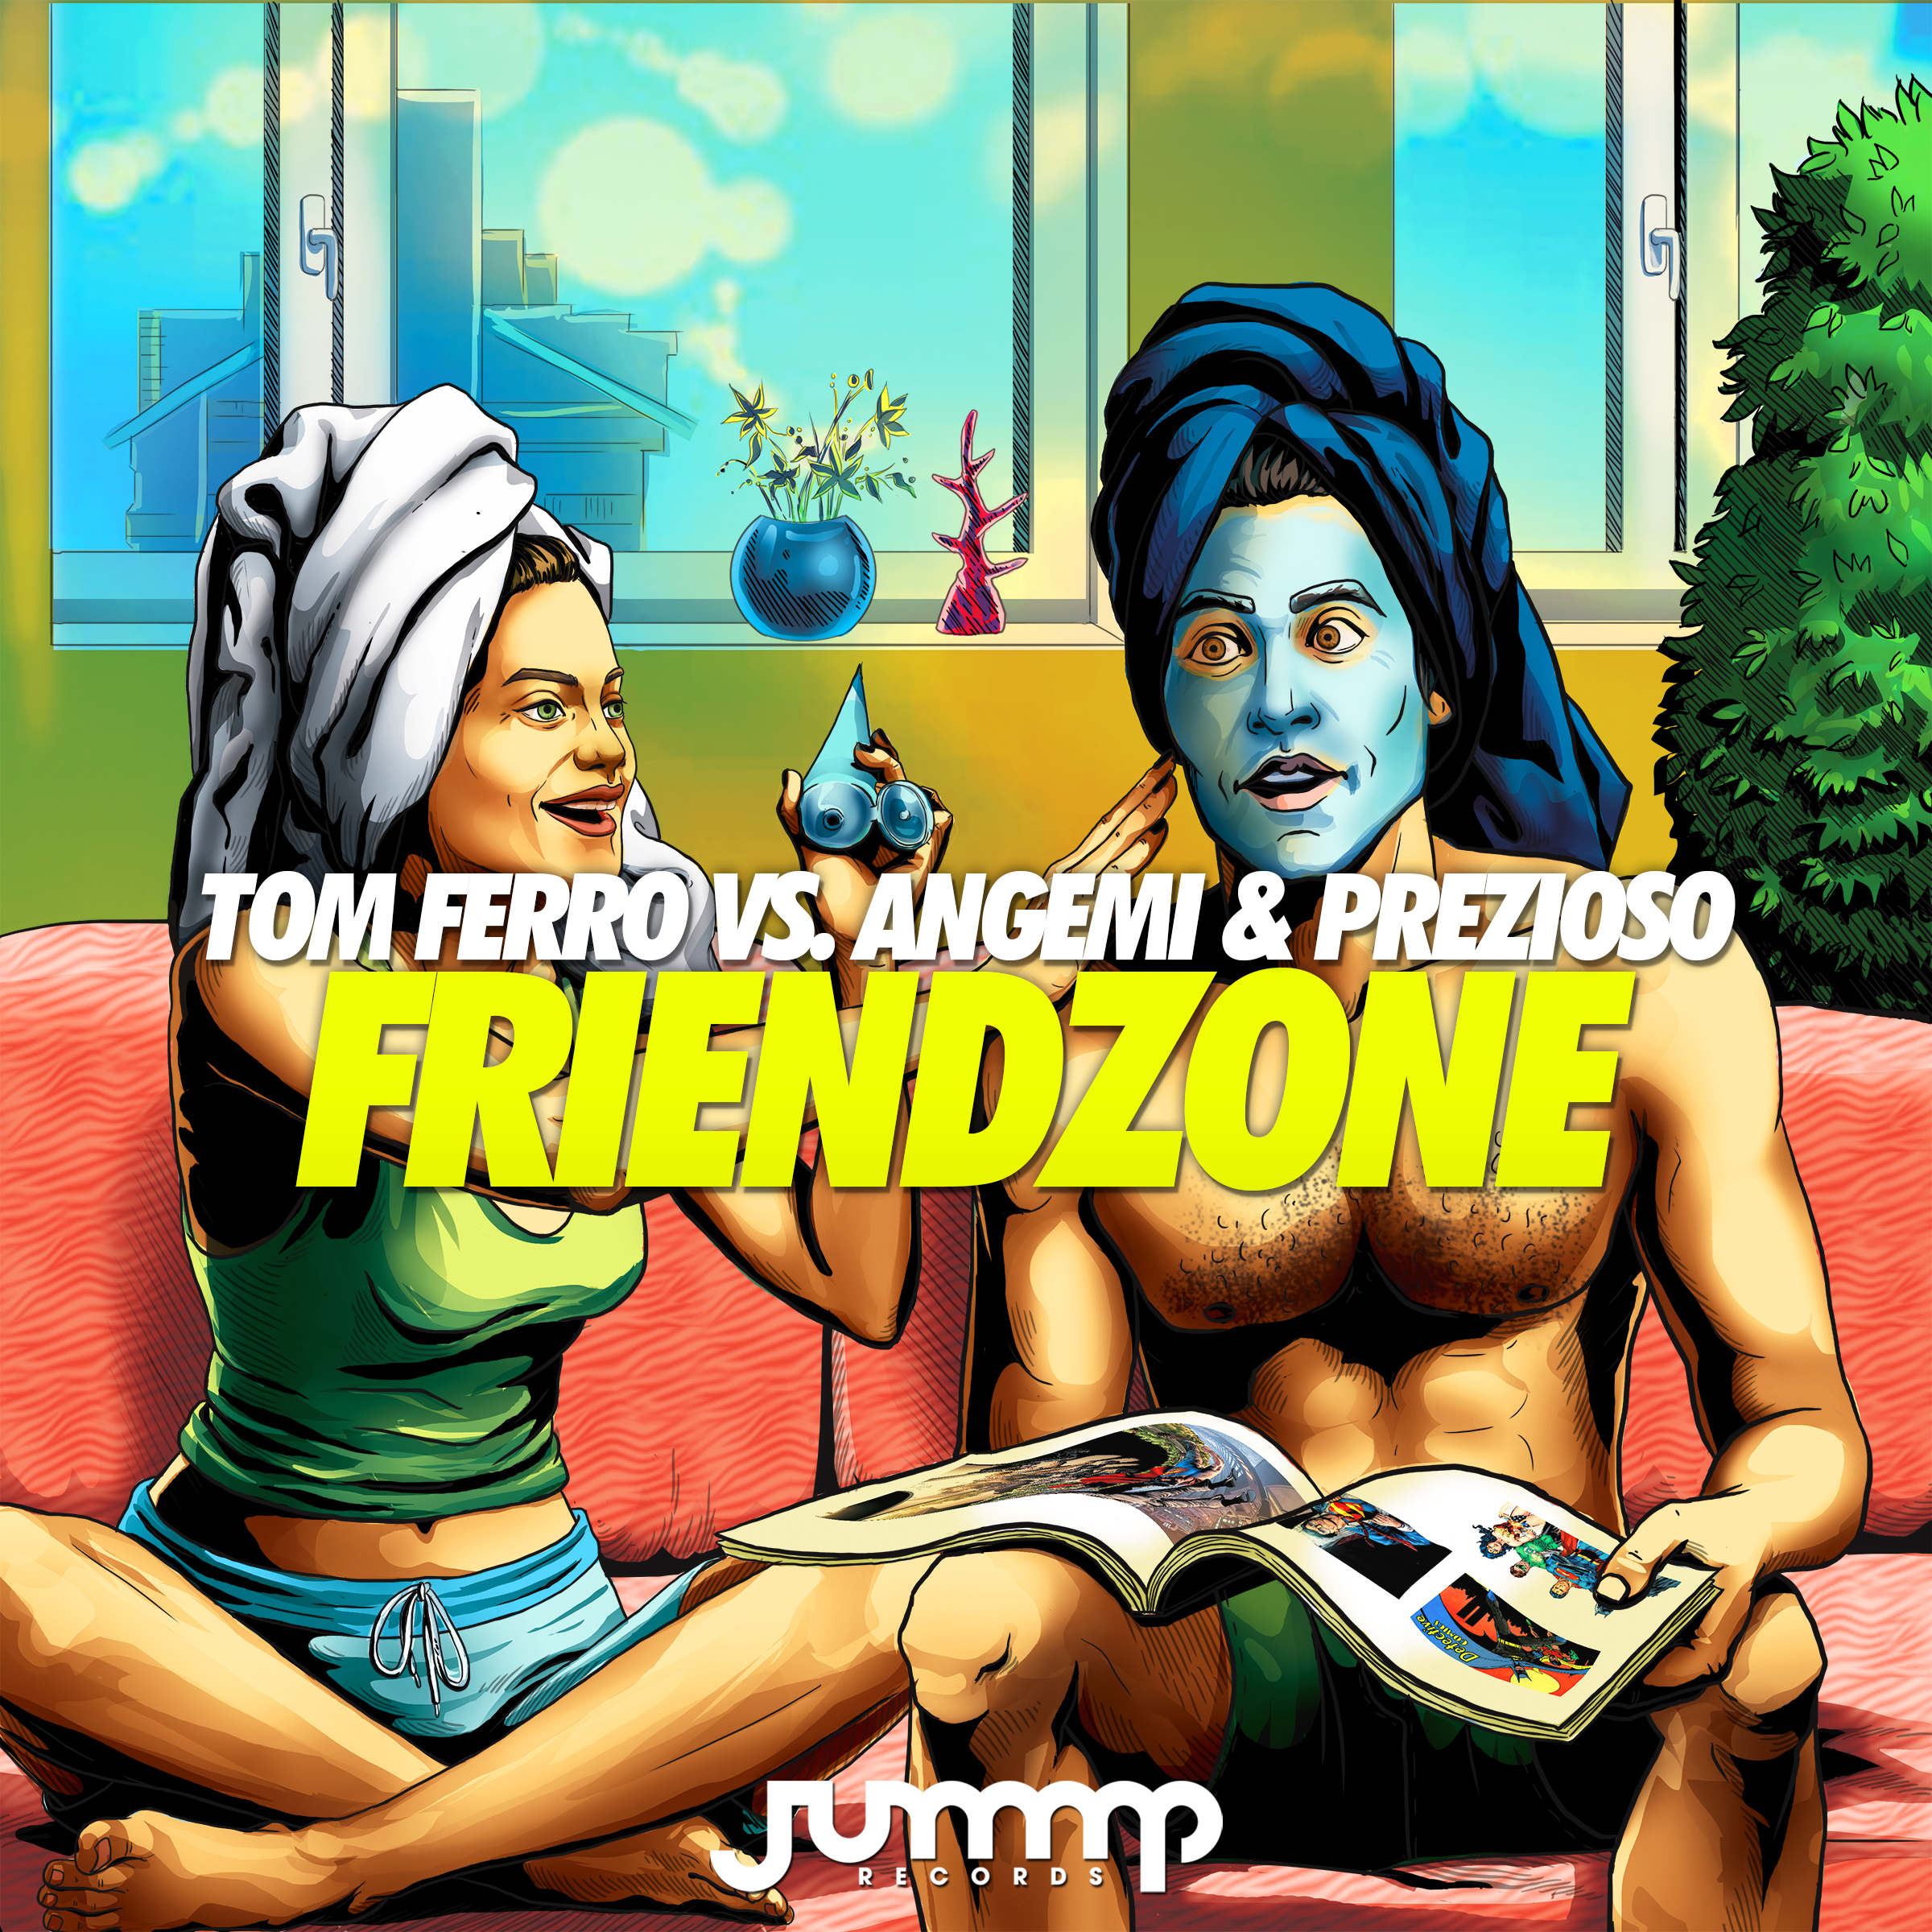 Friendzone (Original Mix)